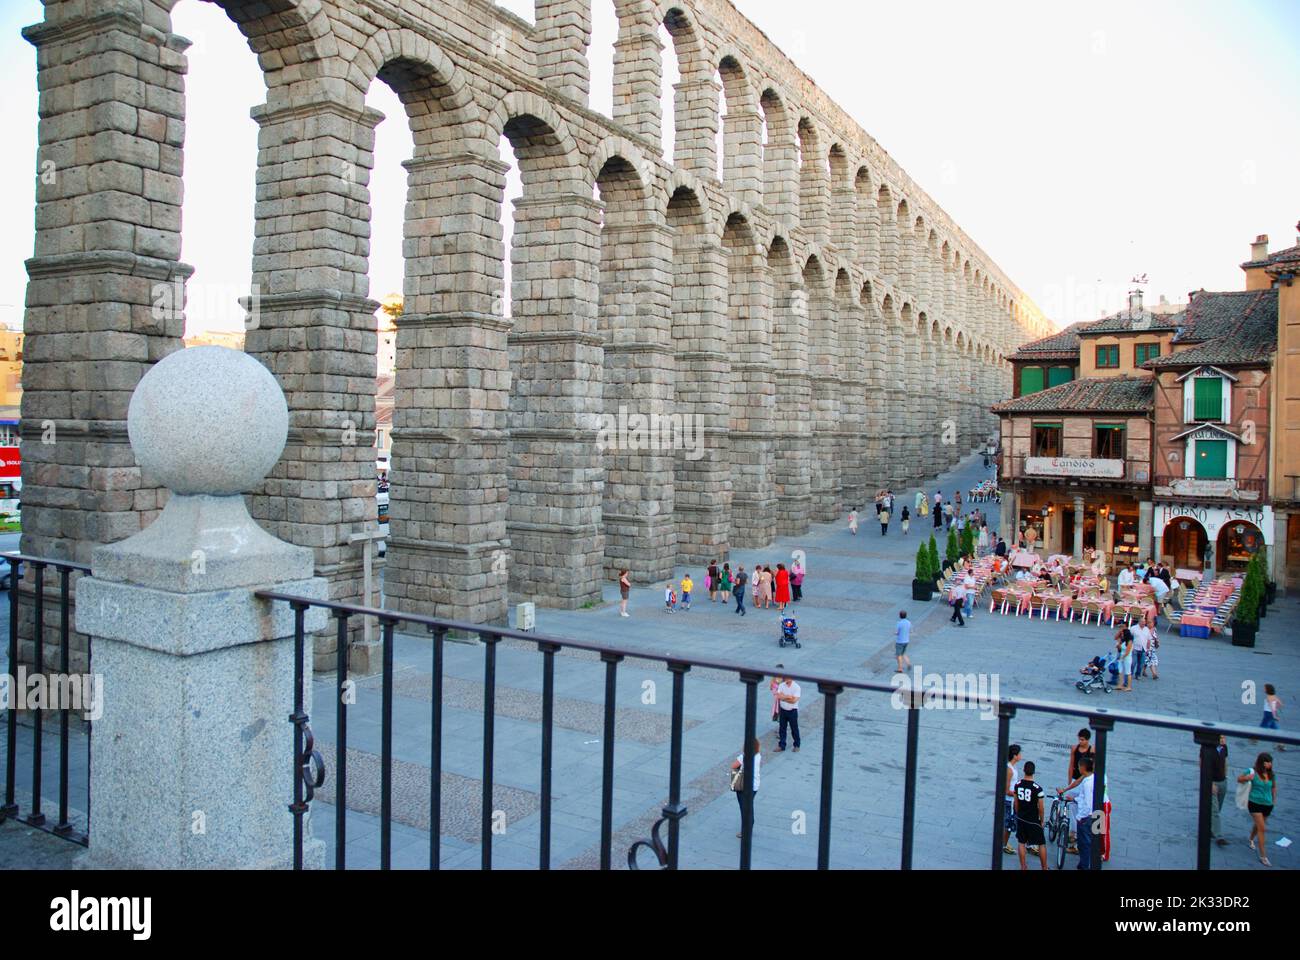 Roman aqueduct. Azoguejo Square, Segovia, Spain. Stock Photo